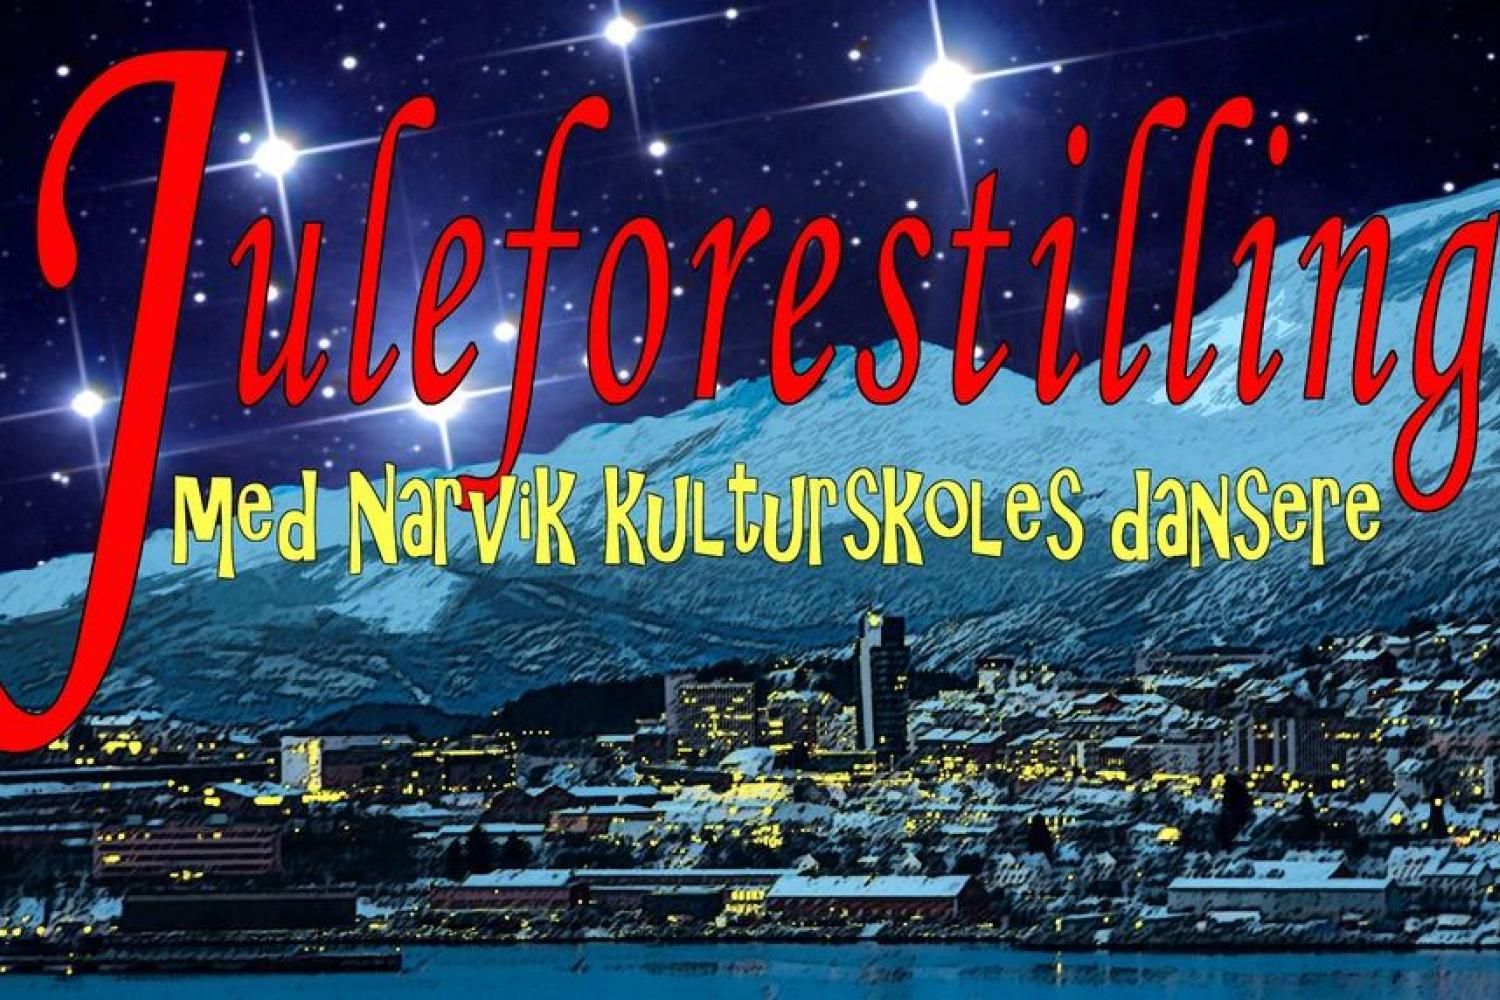 Juleforestilling Narvik Kulturskole's Dansere